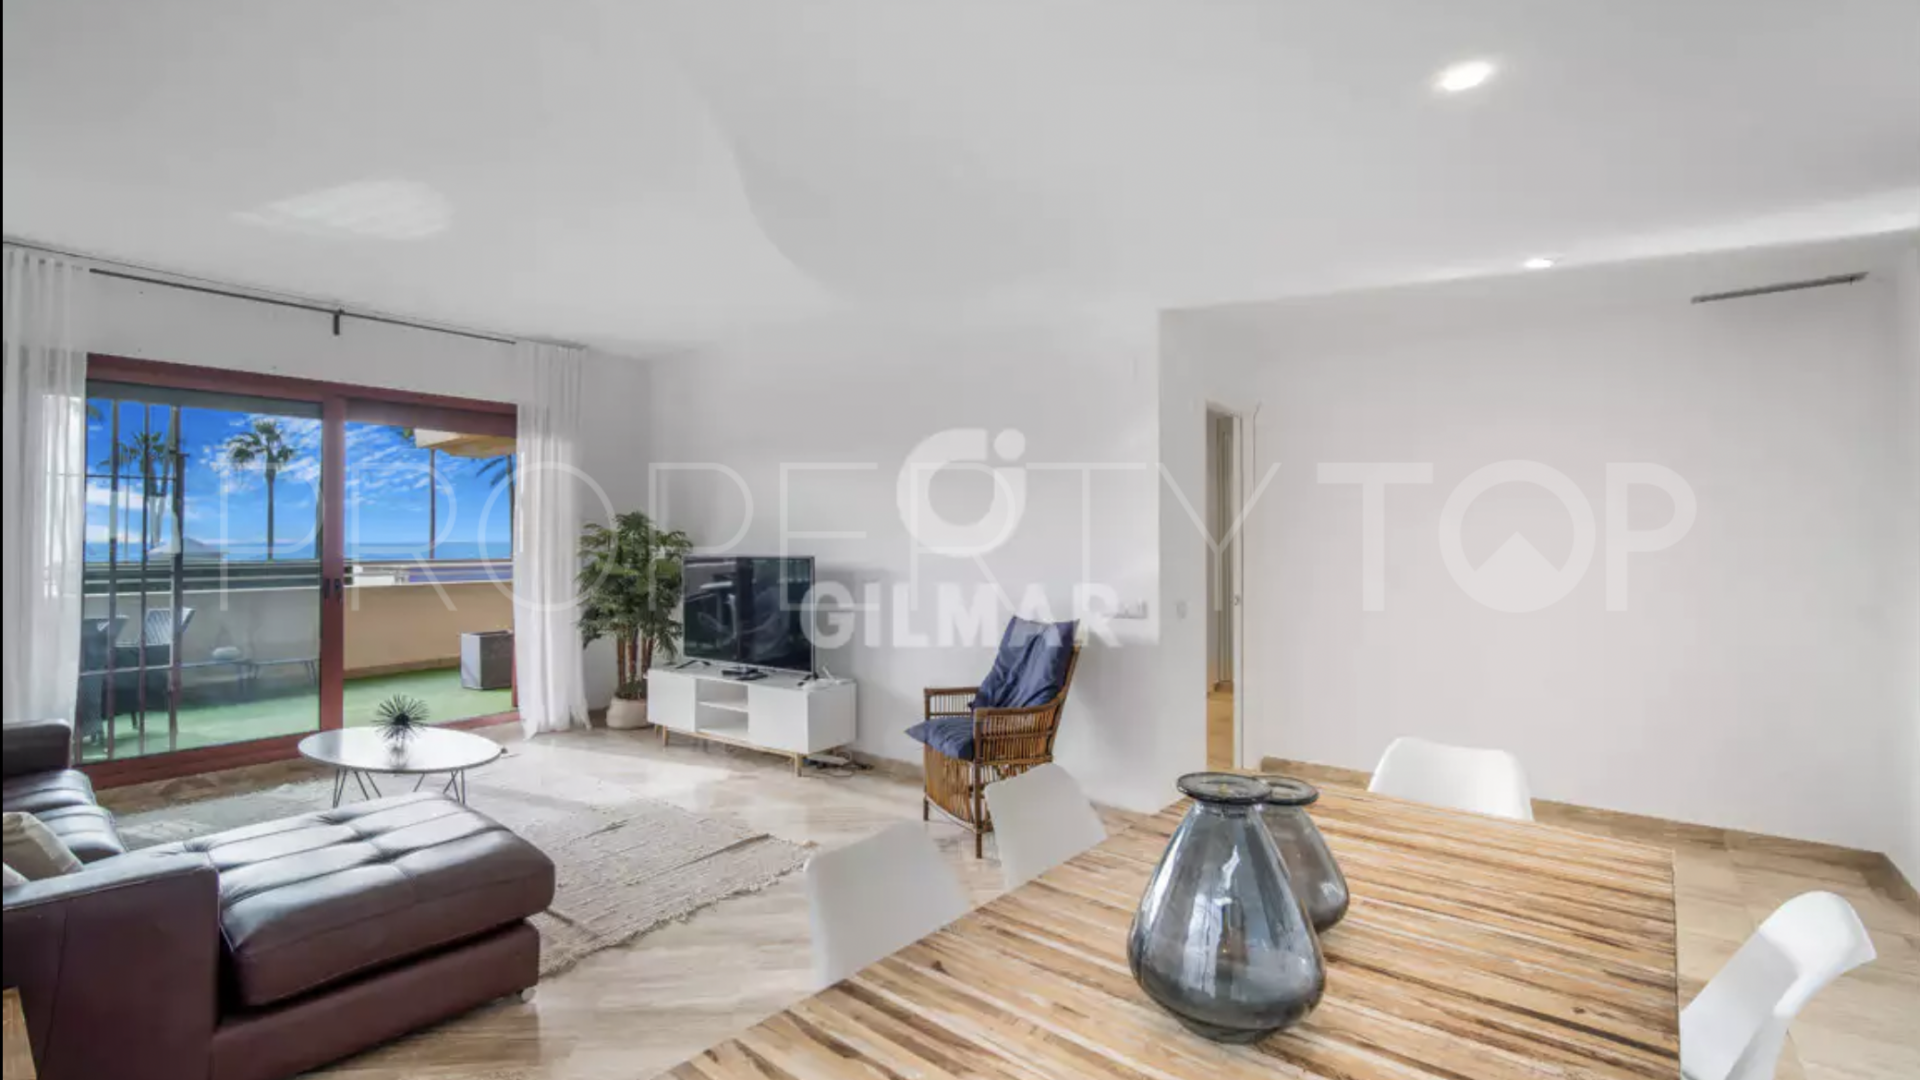 For sale ground floor apartment in San Pedro de Alcantara